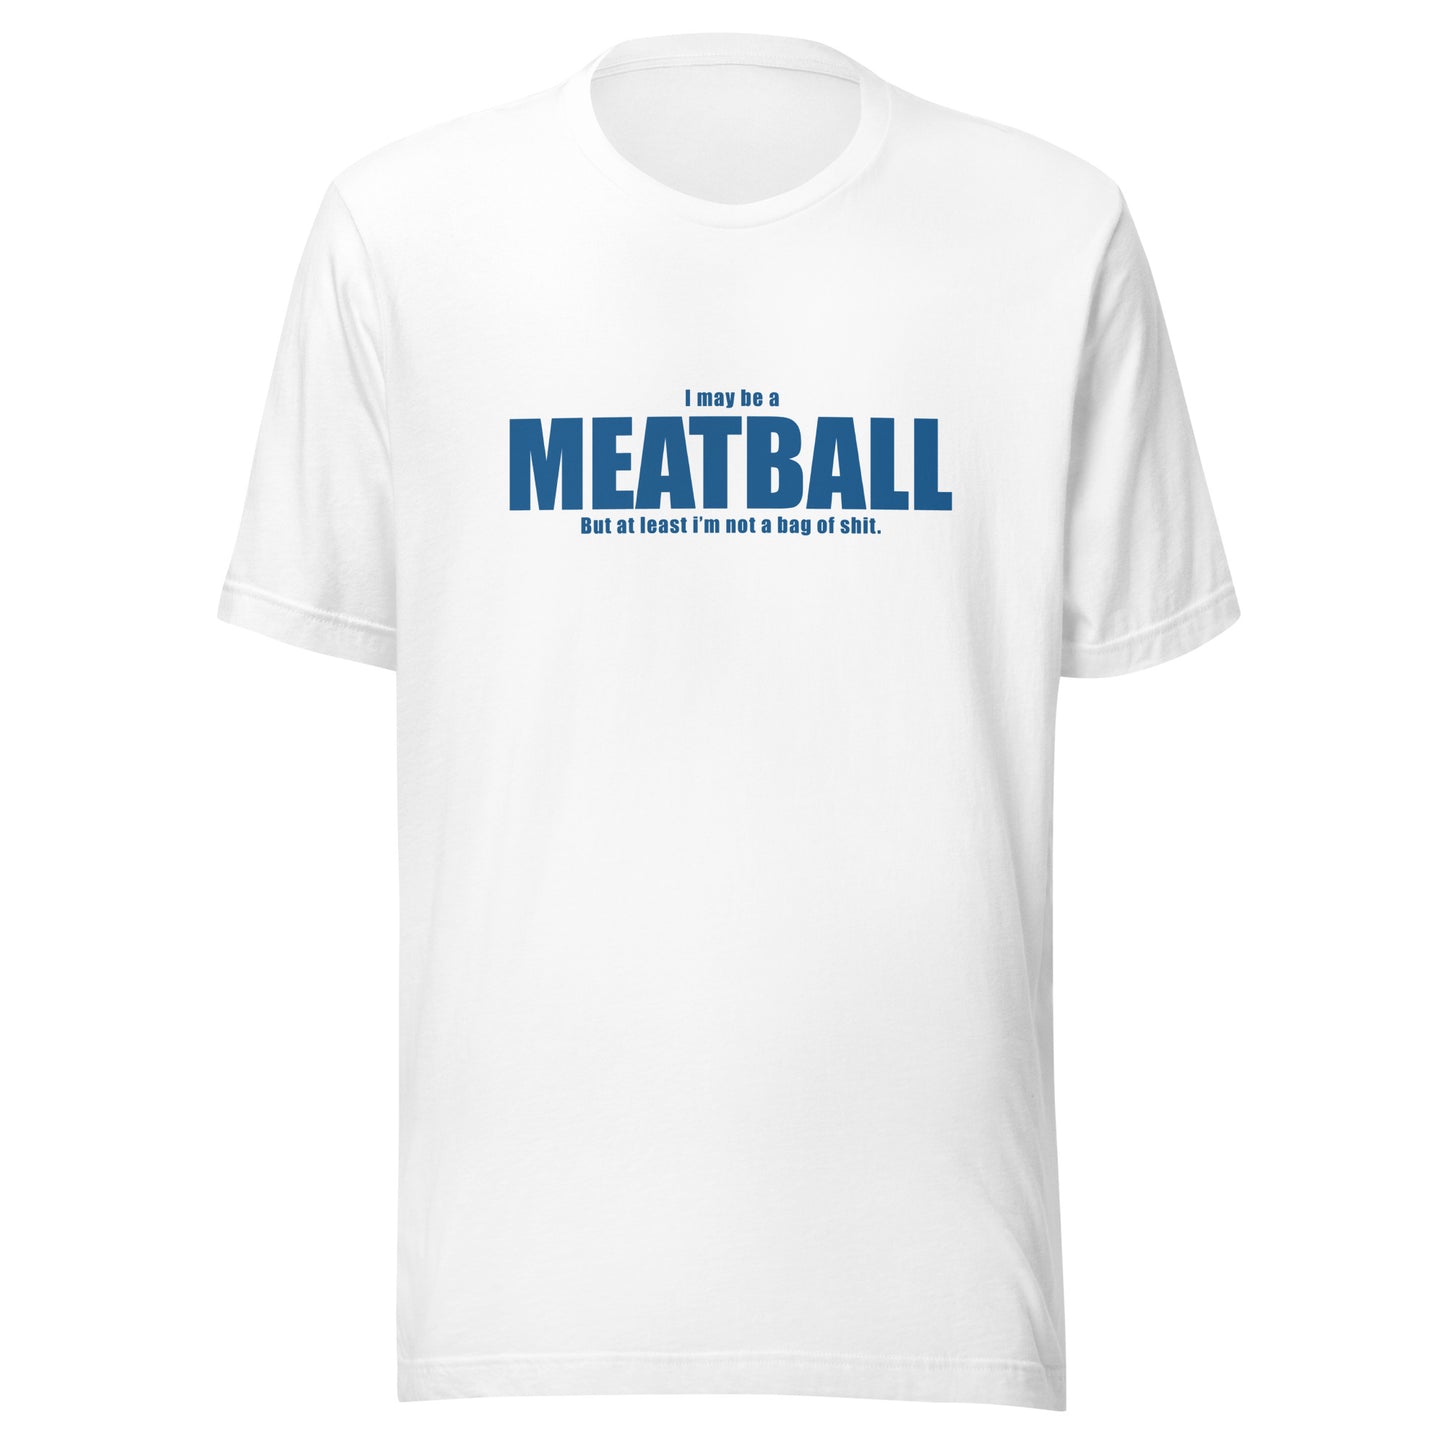 I may be a meatball…